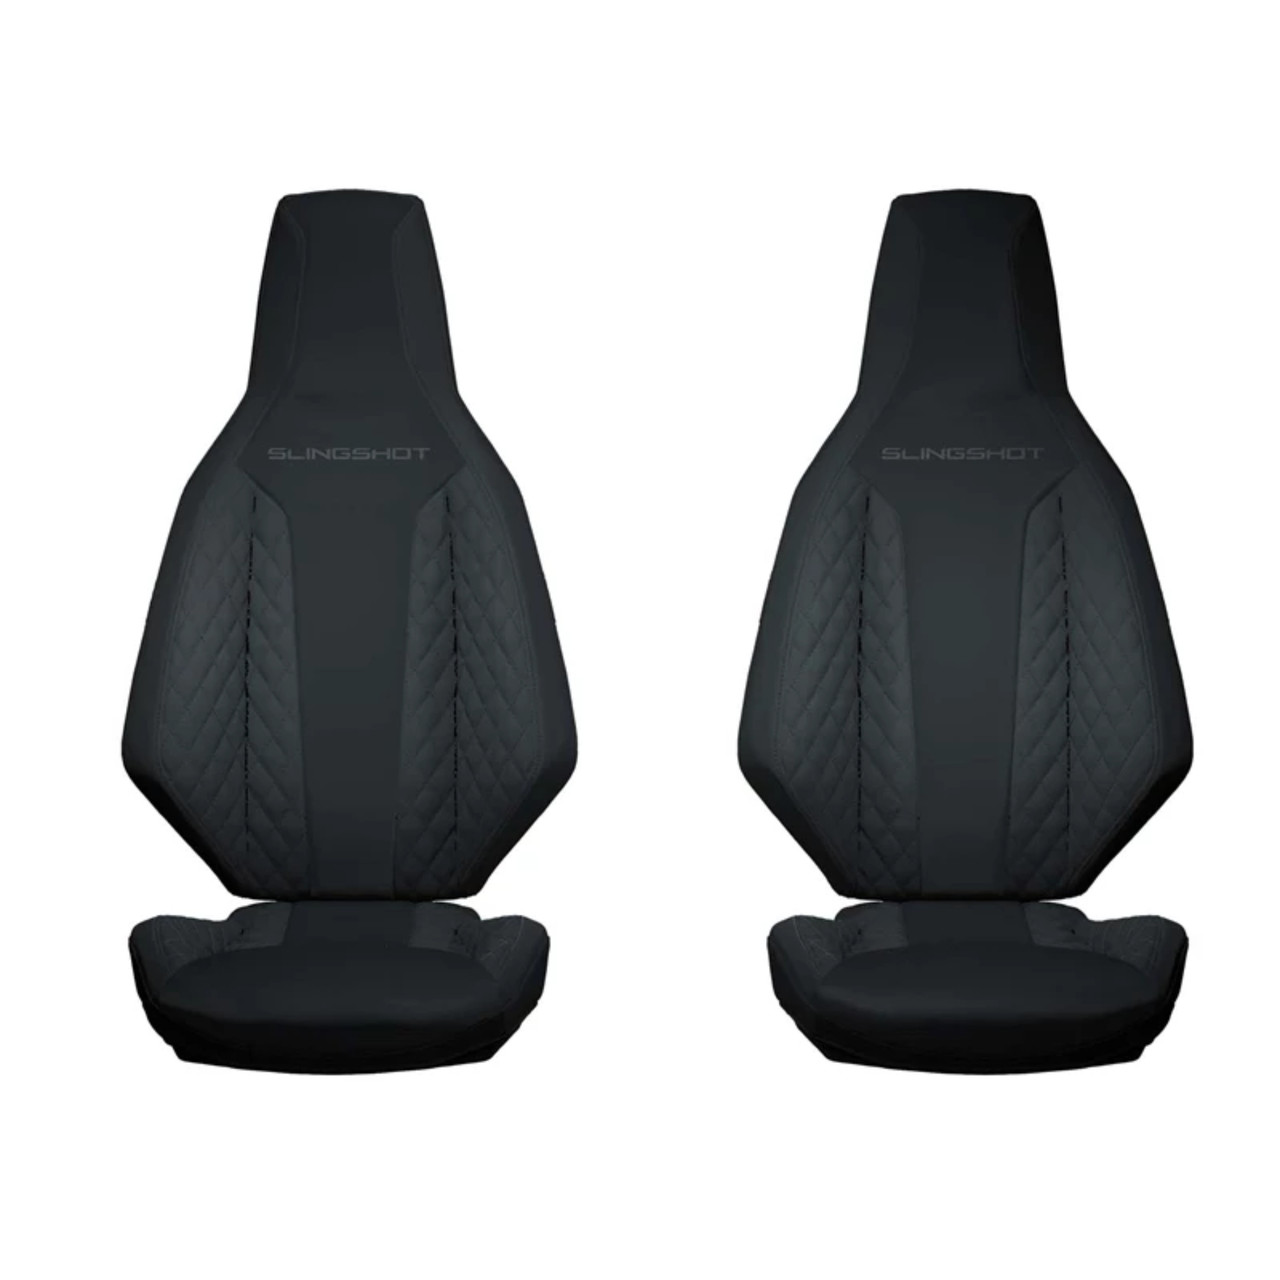 Polaris New OEM Black Comfort Seat Pair for Slingshot, 2889588-VBE